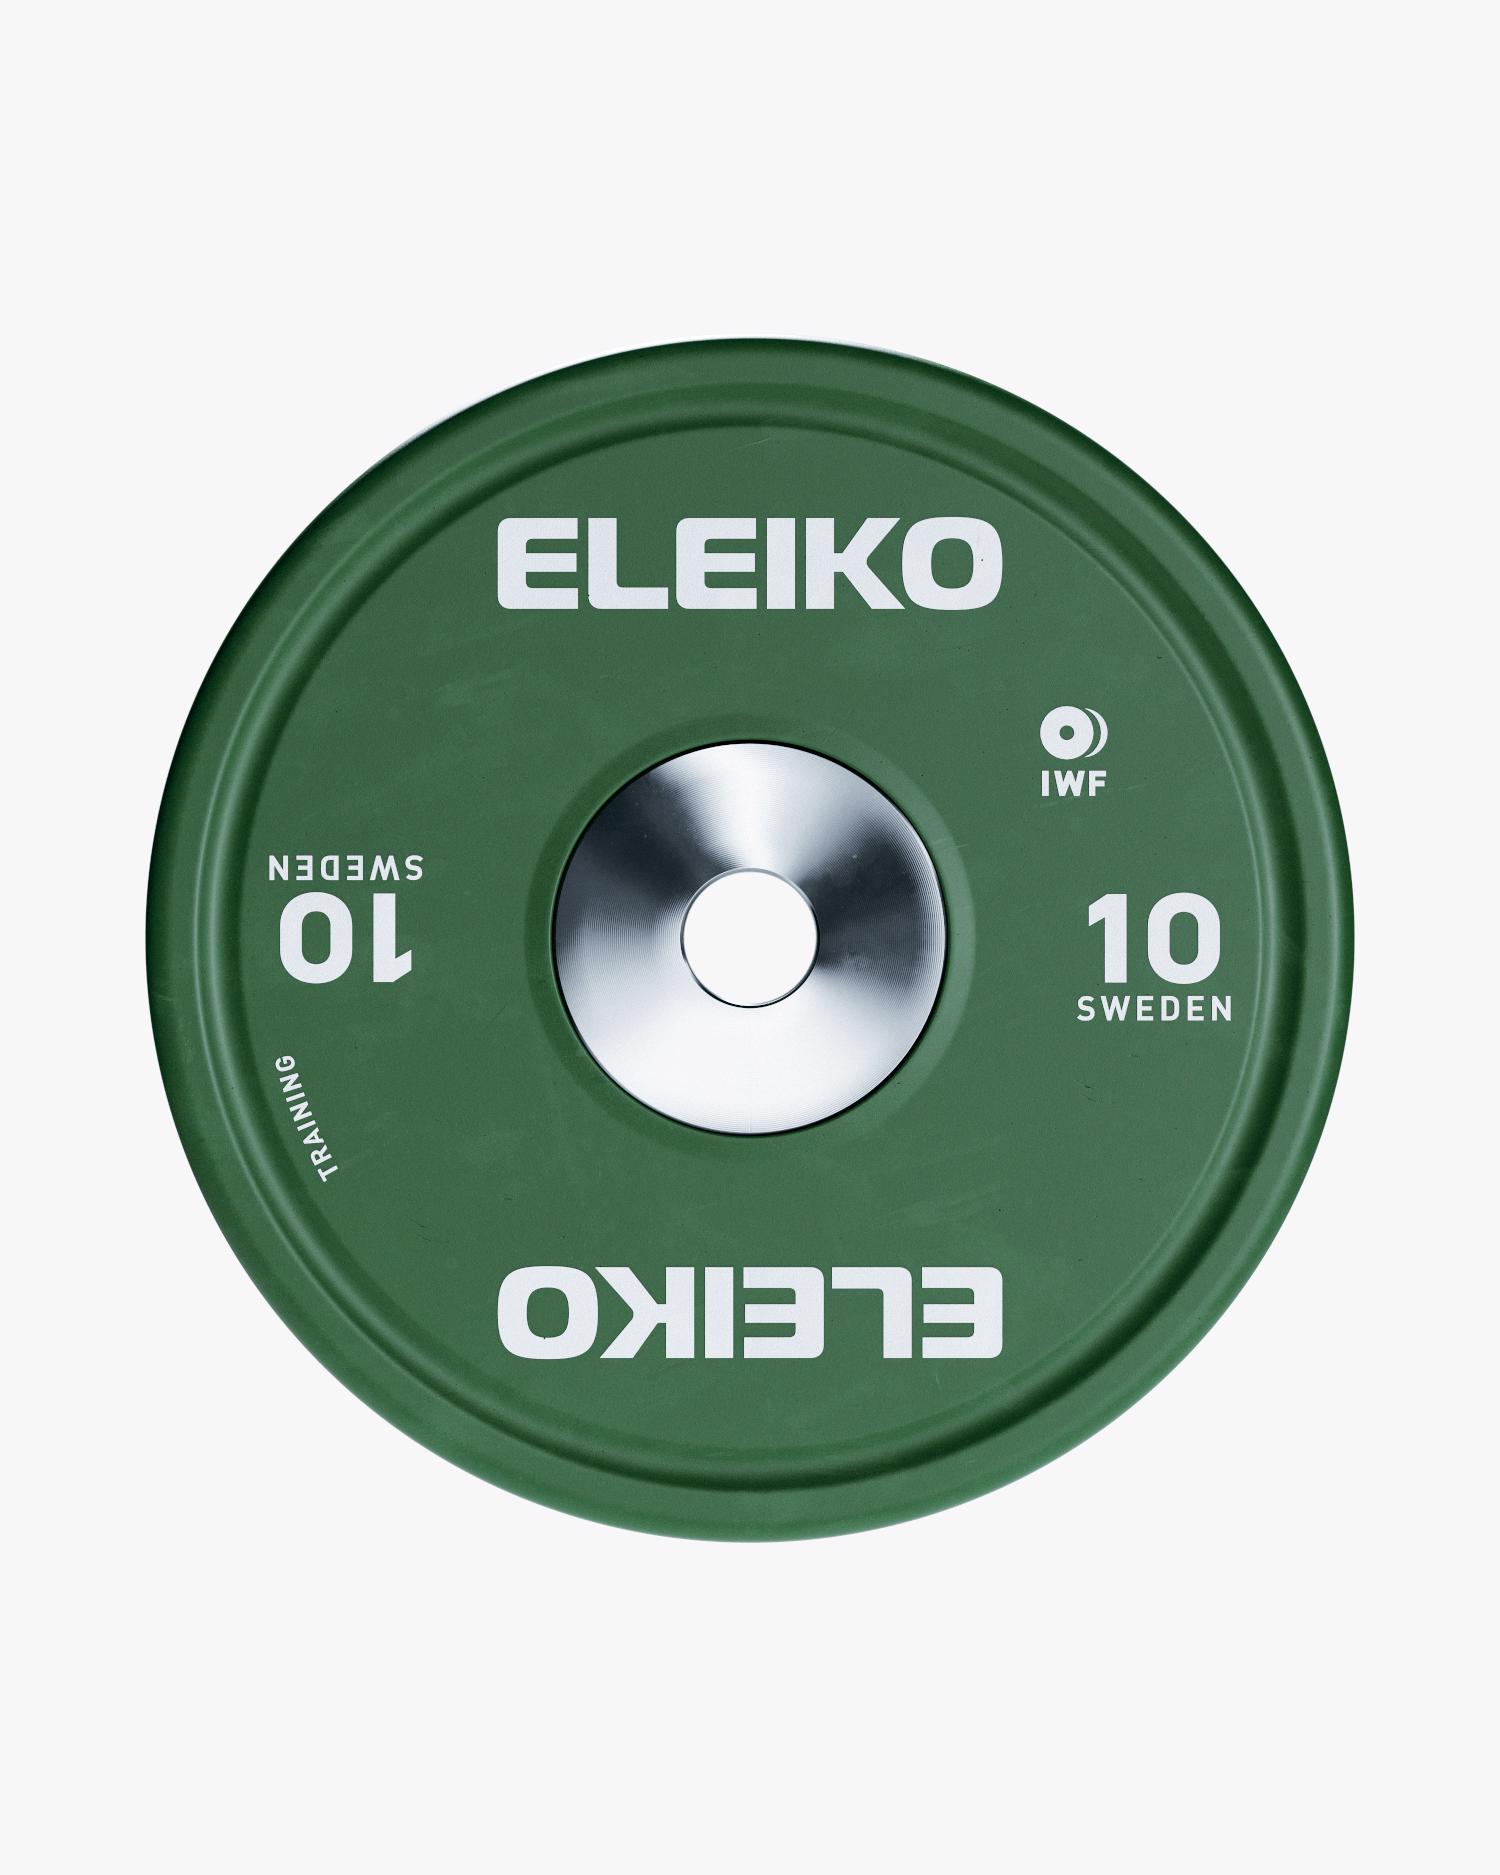 IWF Weightlifting Training Plates | Eleiko